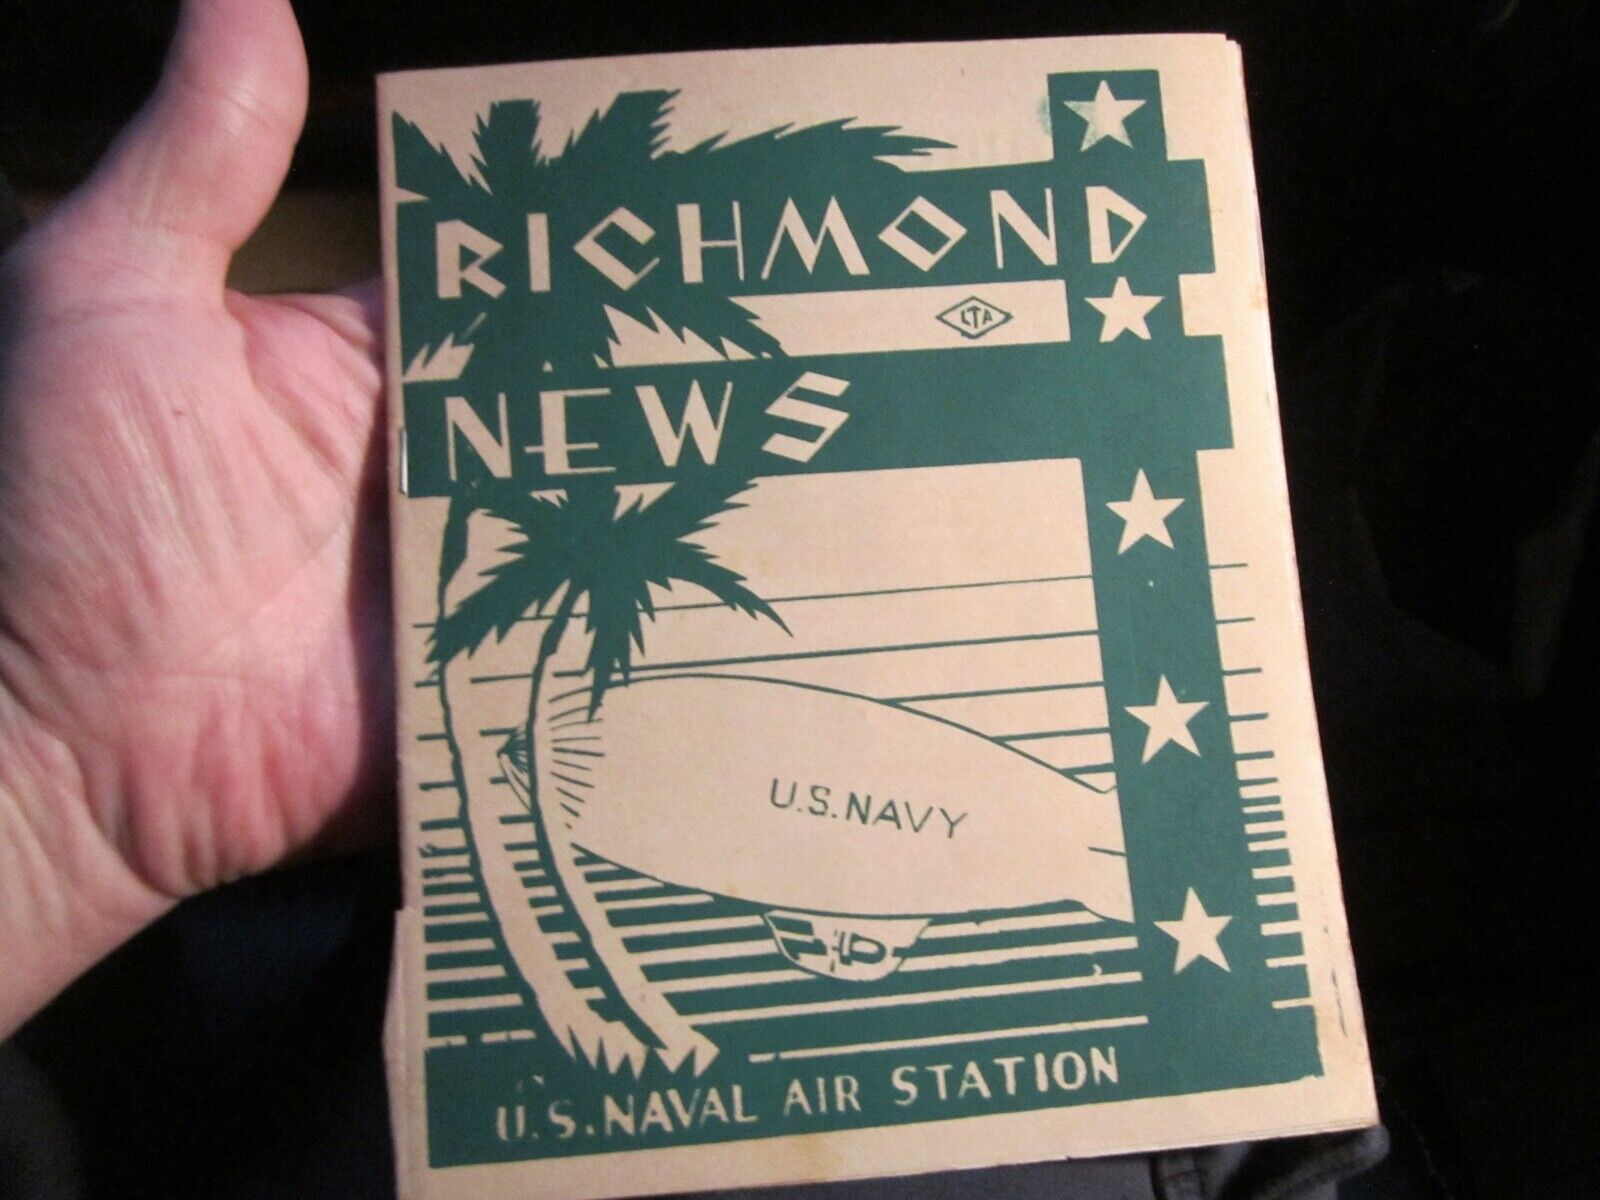 1943 U.S. NAVY RICHMOND NEWS BOOKLET U.S. NAVAL AIR STATION -  BBA50